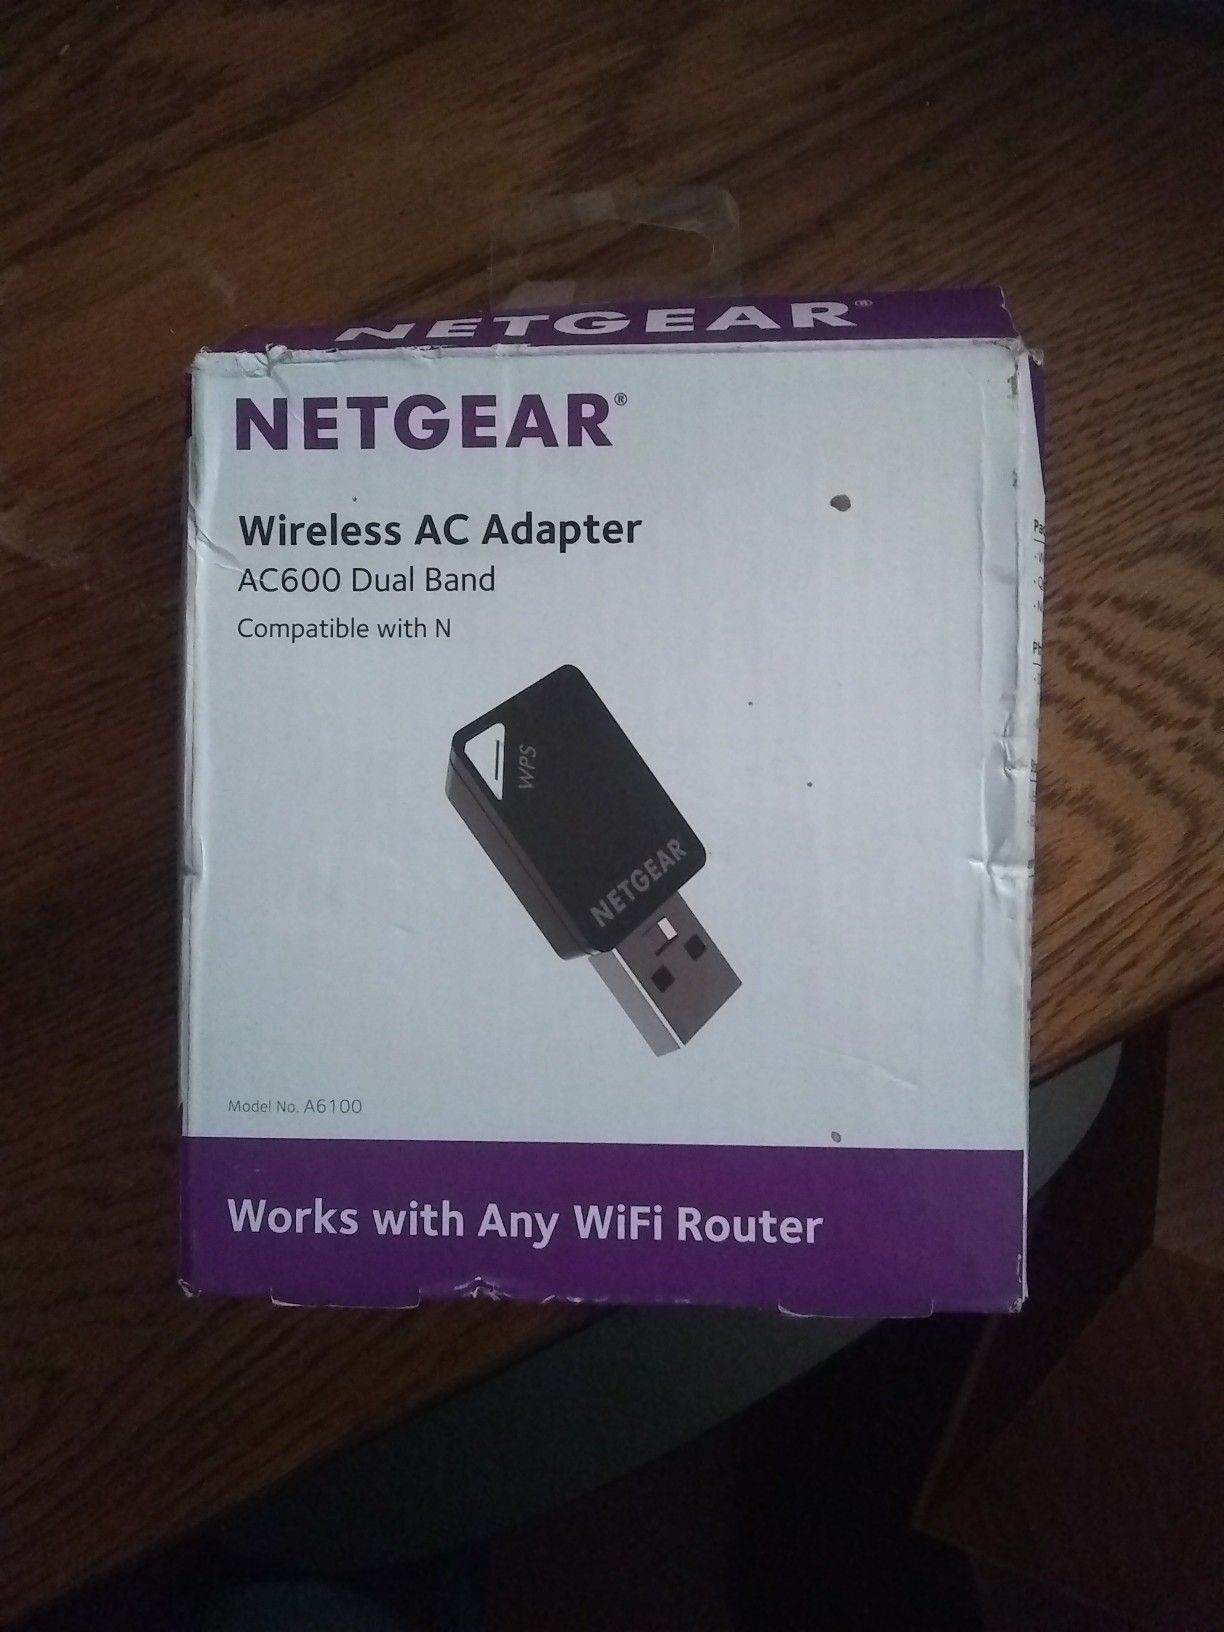 Netgear wireless AC adapter AC600